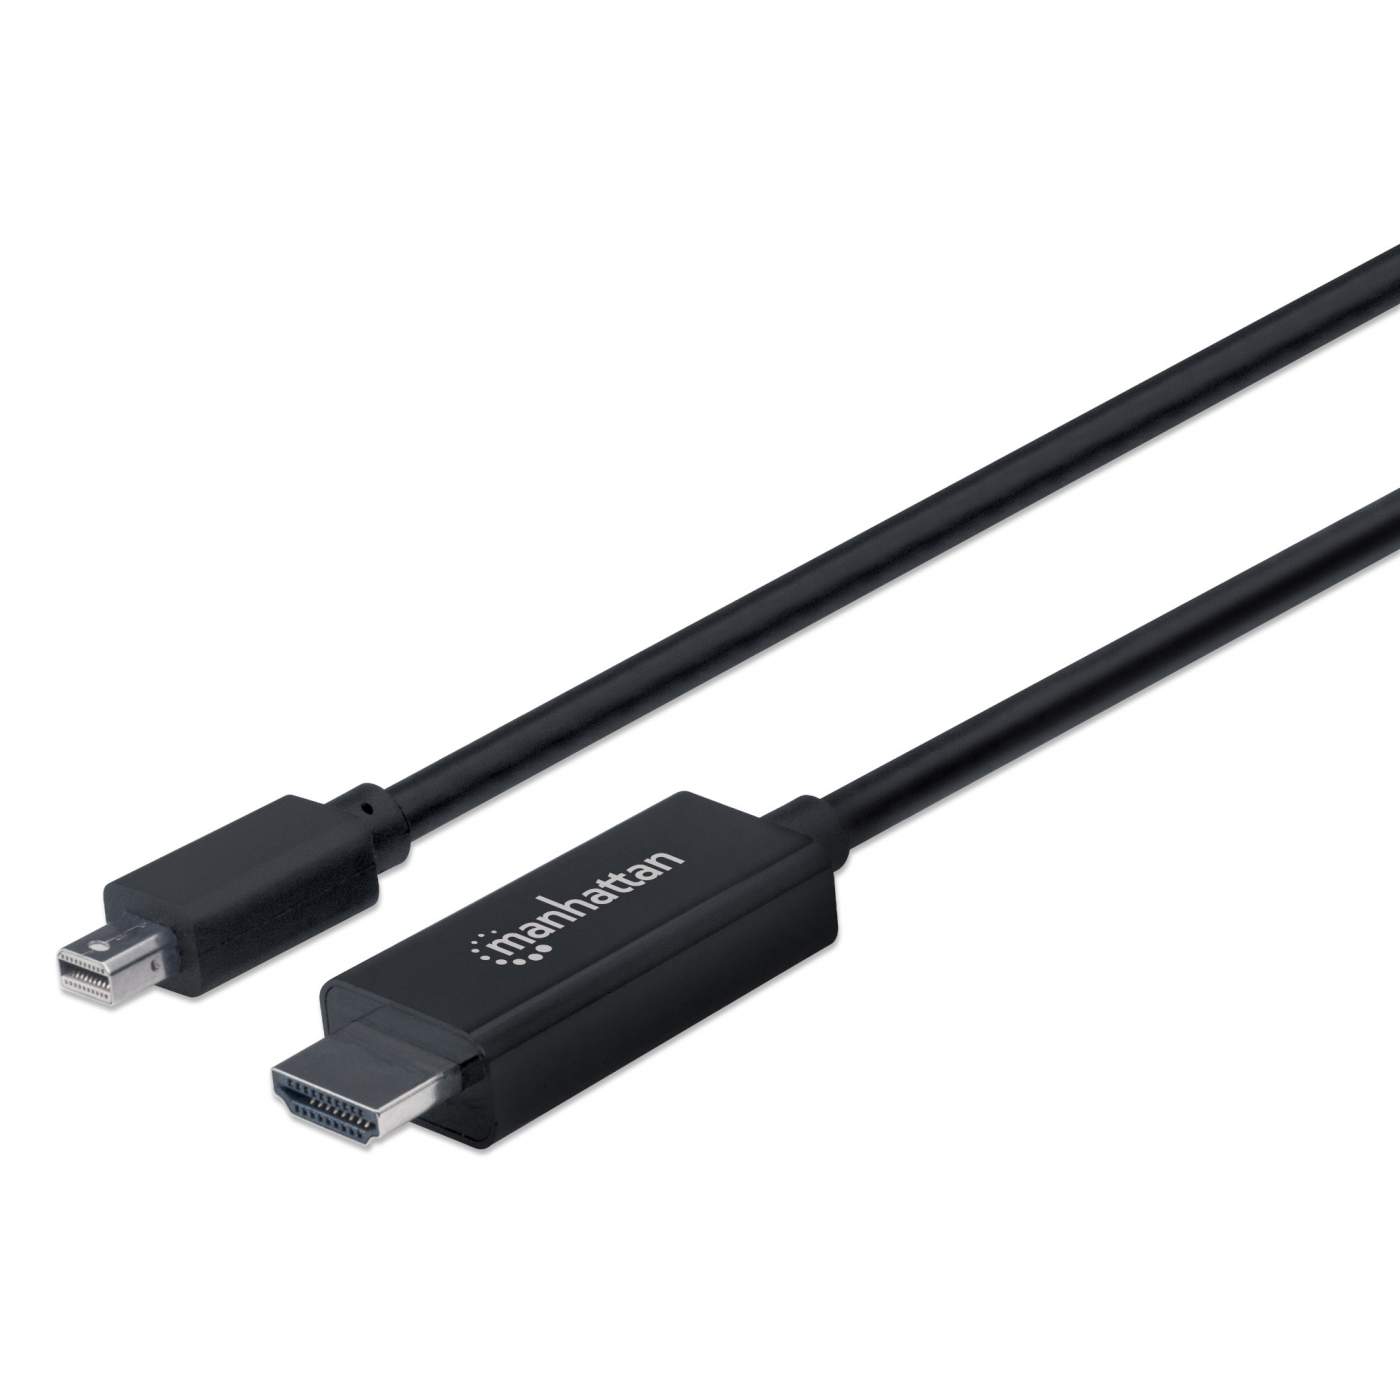 nitrogen Disco Og Manhattan 1080p Mini DisplayPort to HDMI Cable (153232)